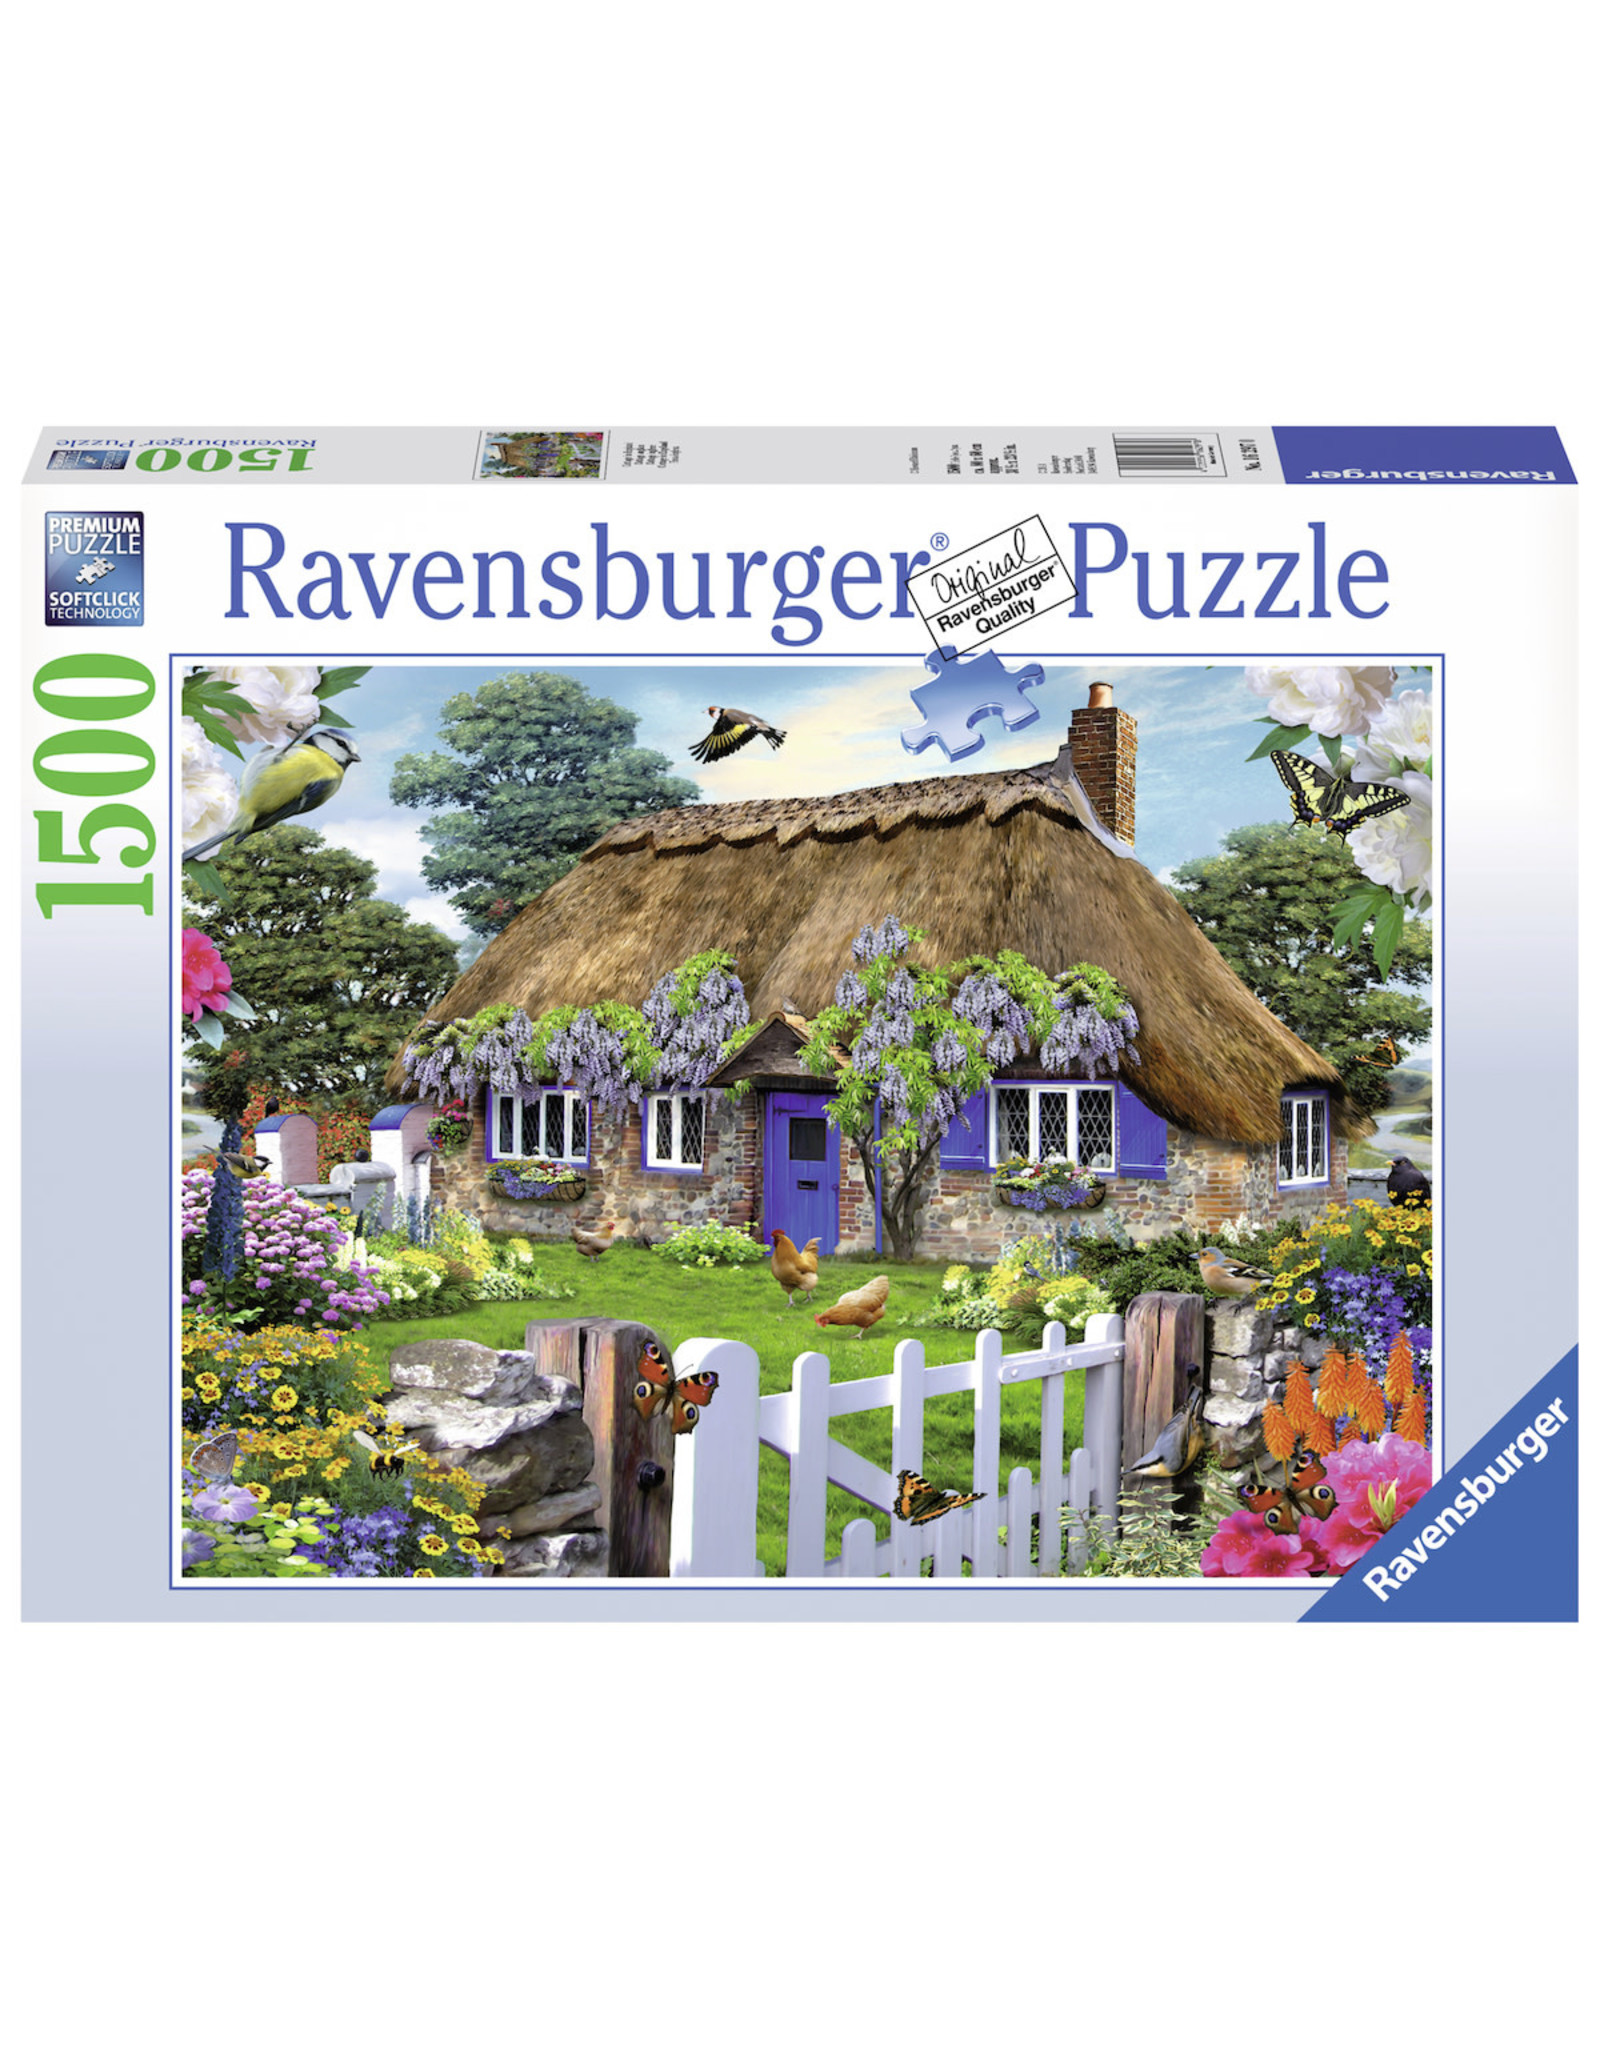 Ravensburger Ravensburger puzzel  162970 Cottage In Engeland 1500 stukjes